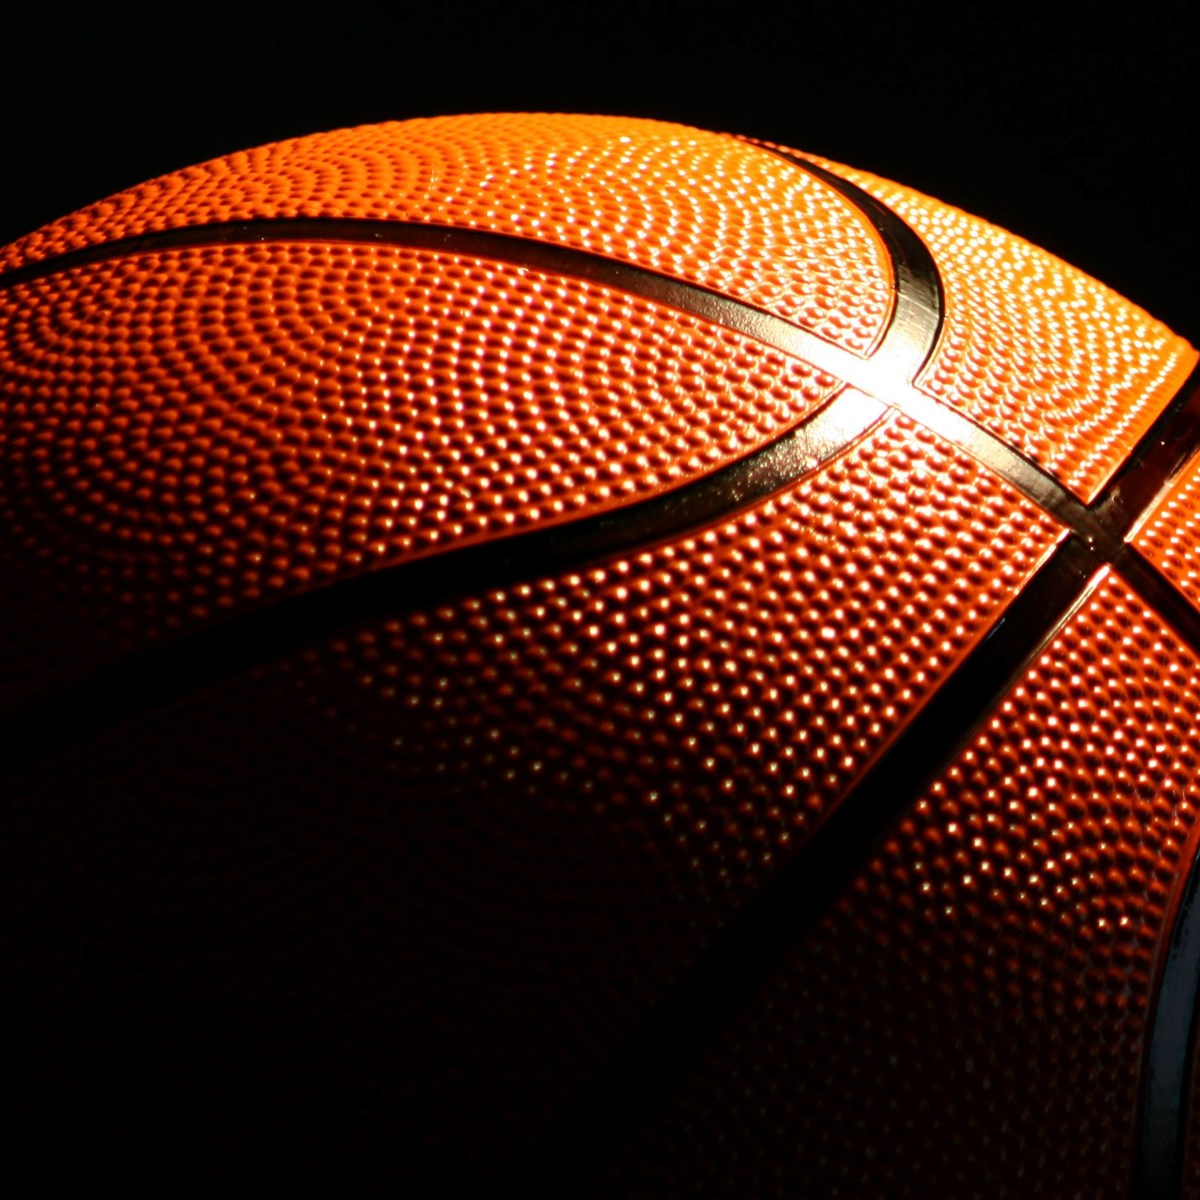 Basketball against black background